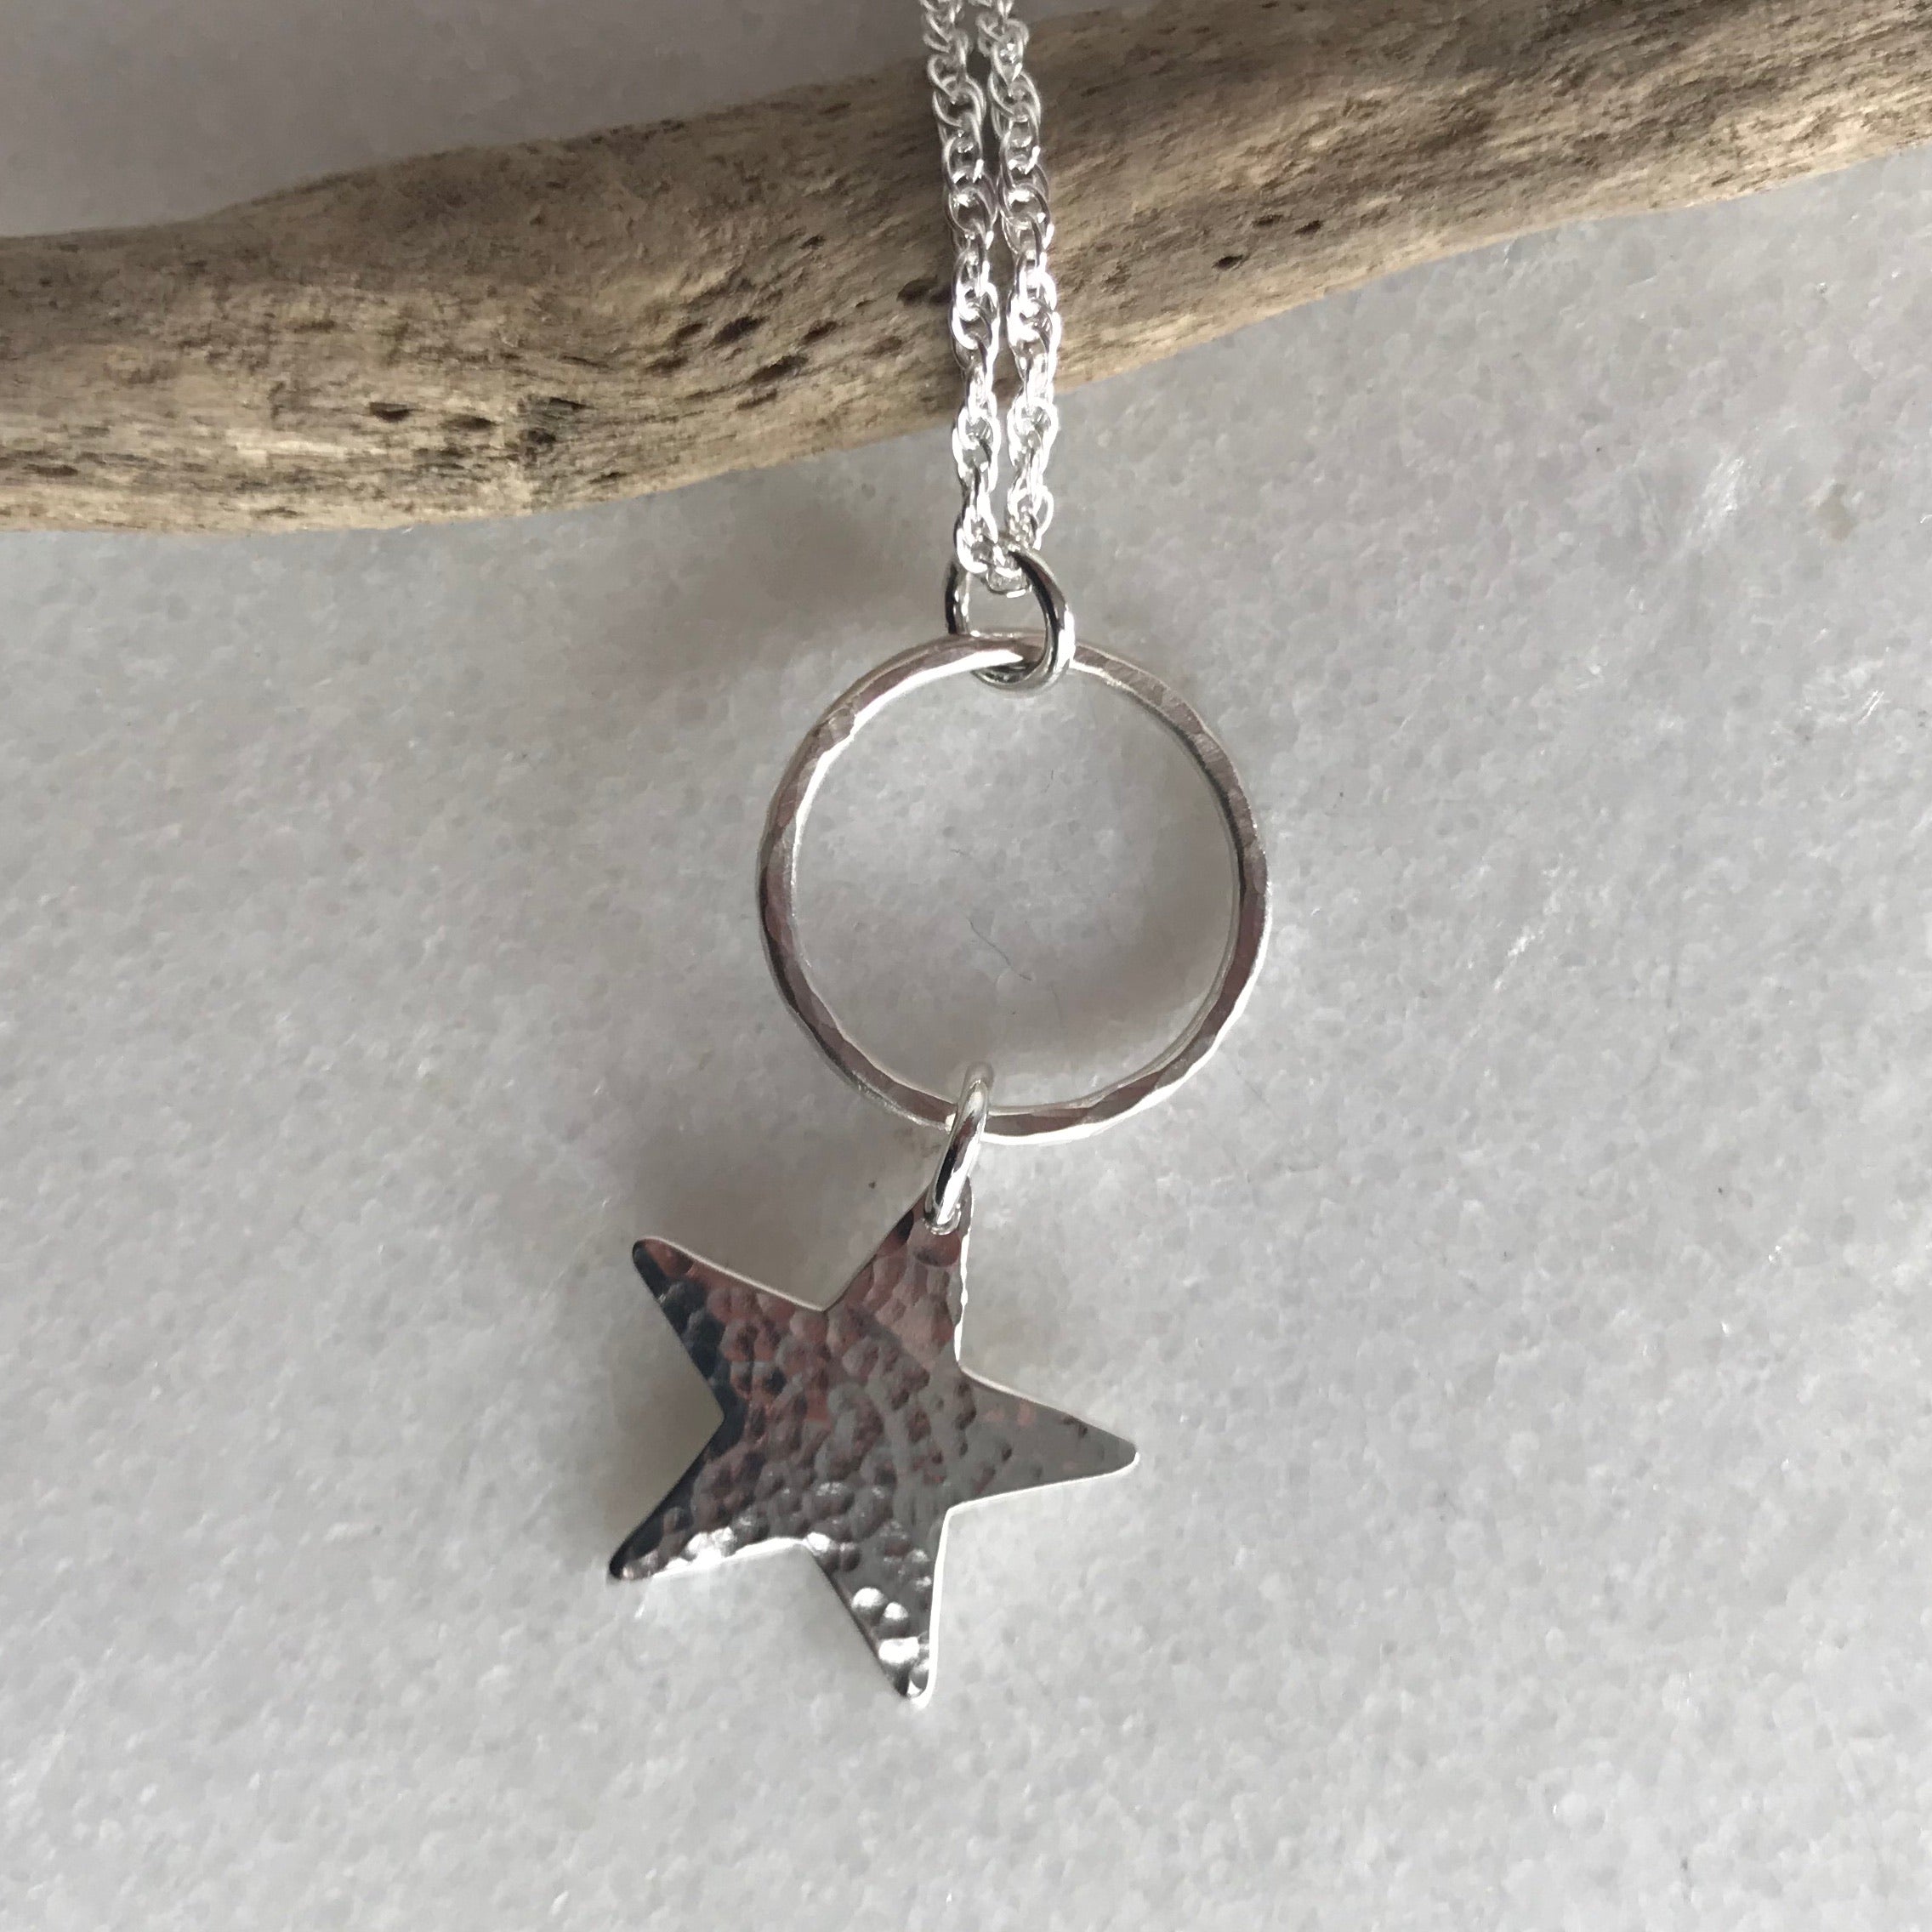 Star Necklace - The Nancy Smillie Shop - Art, Jewellery & Designer Gifts Glasgow